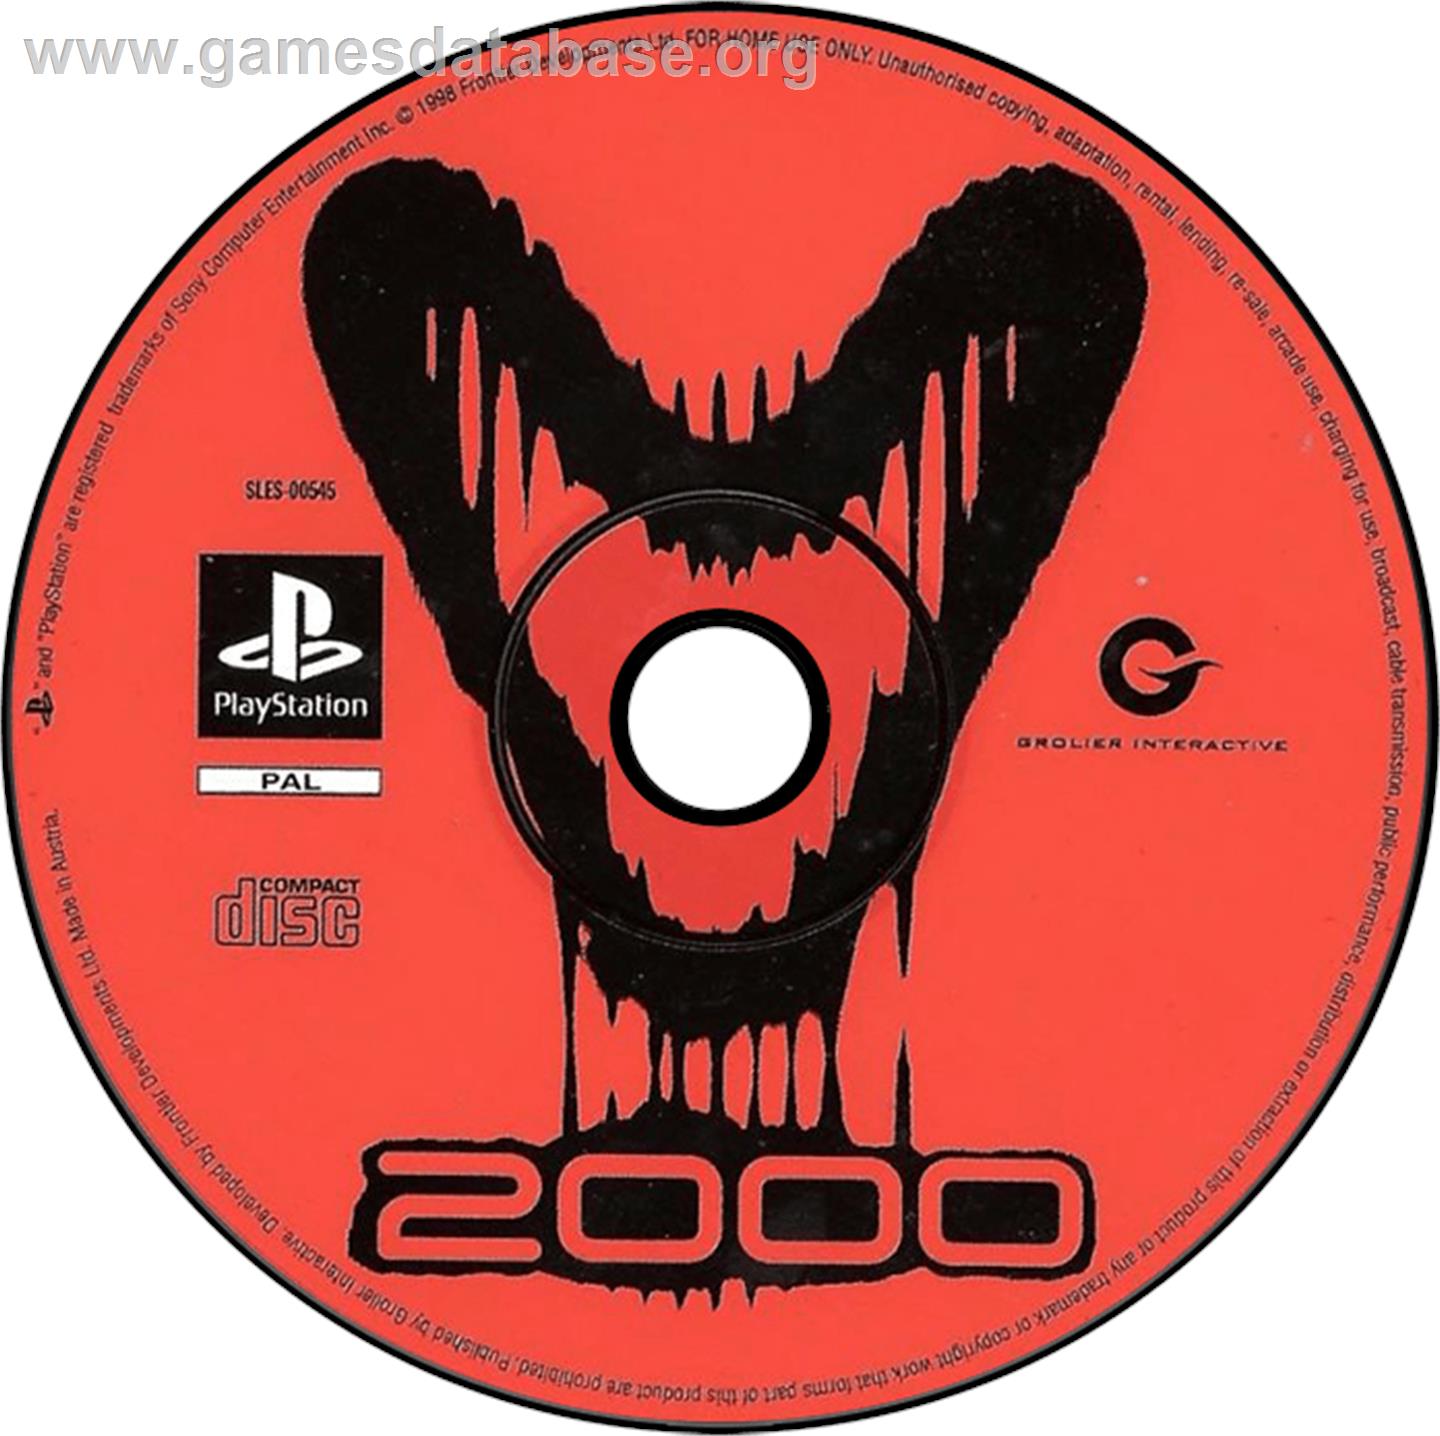 V2000 - Sony Playstation - Artwork - Disc